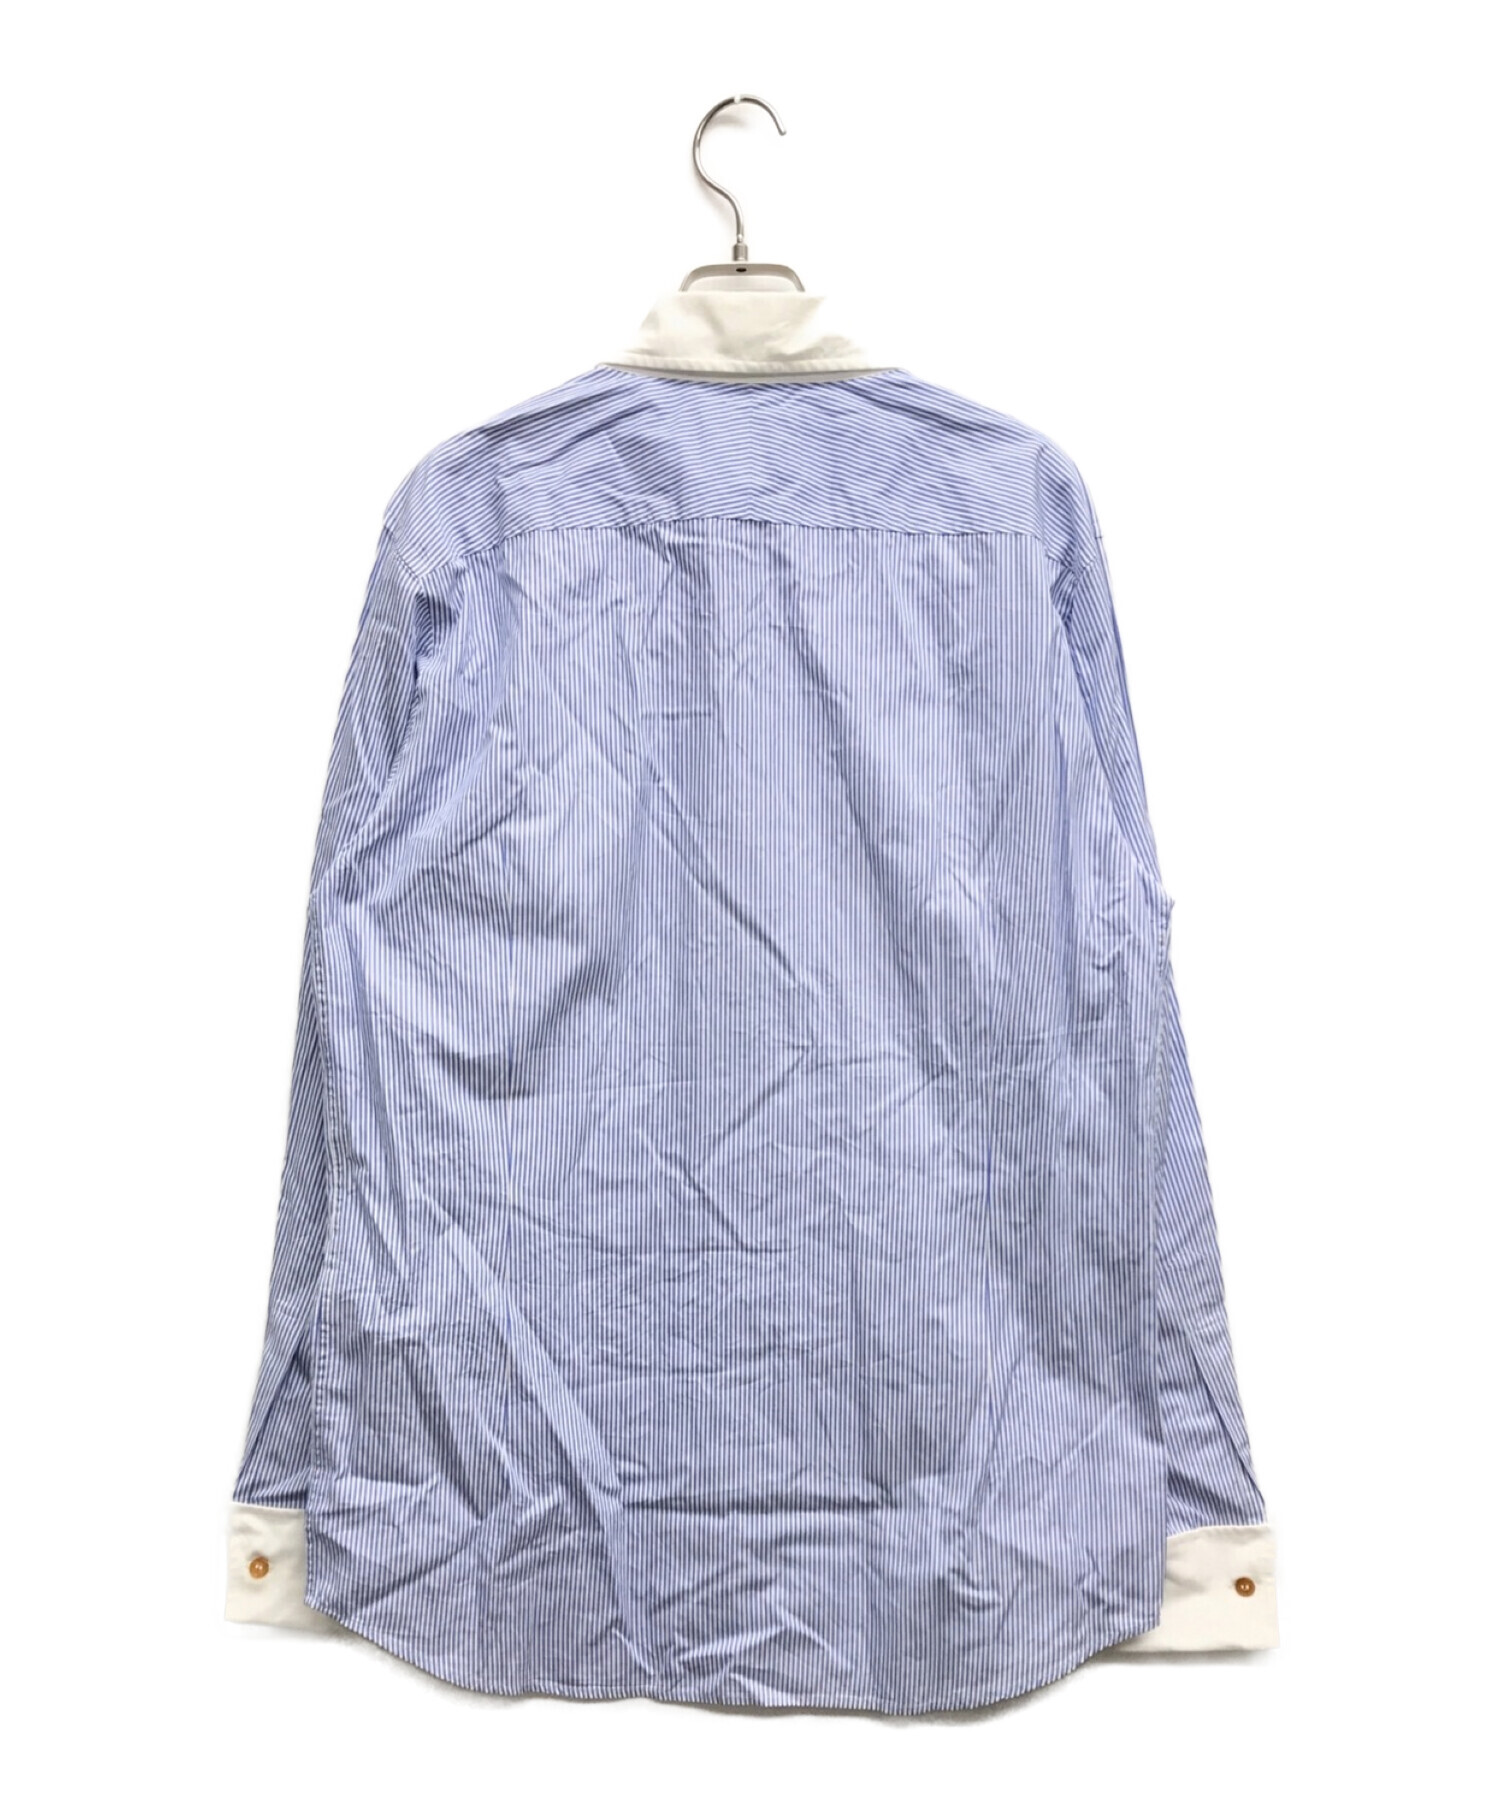 Vivienne Westwood (ヴィヴィアンウエストウッド) ストライプシャツ ブルー サイズ:50